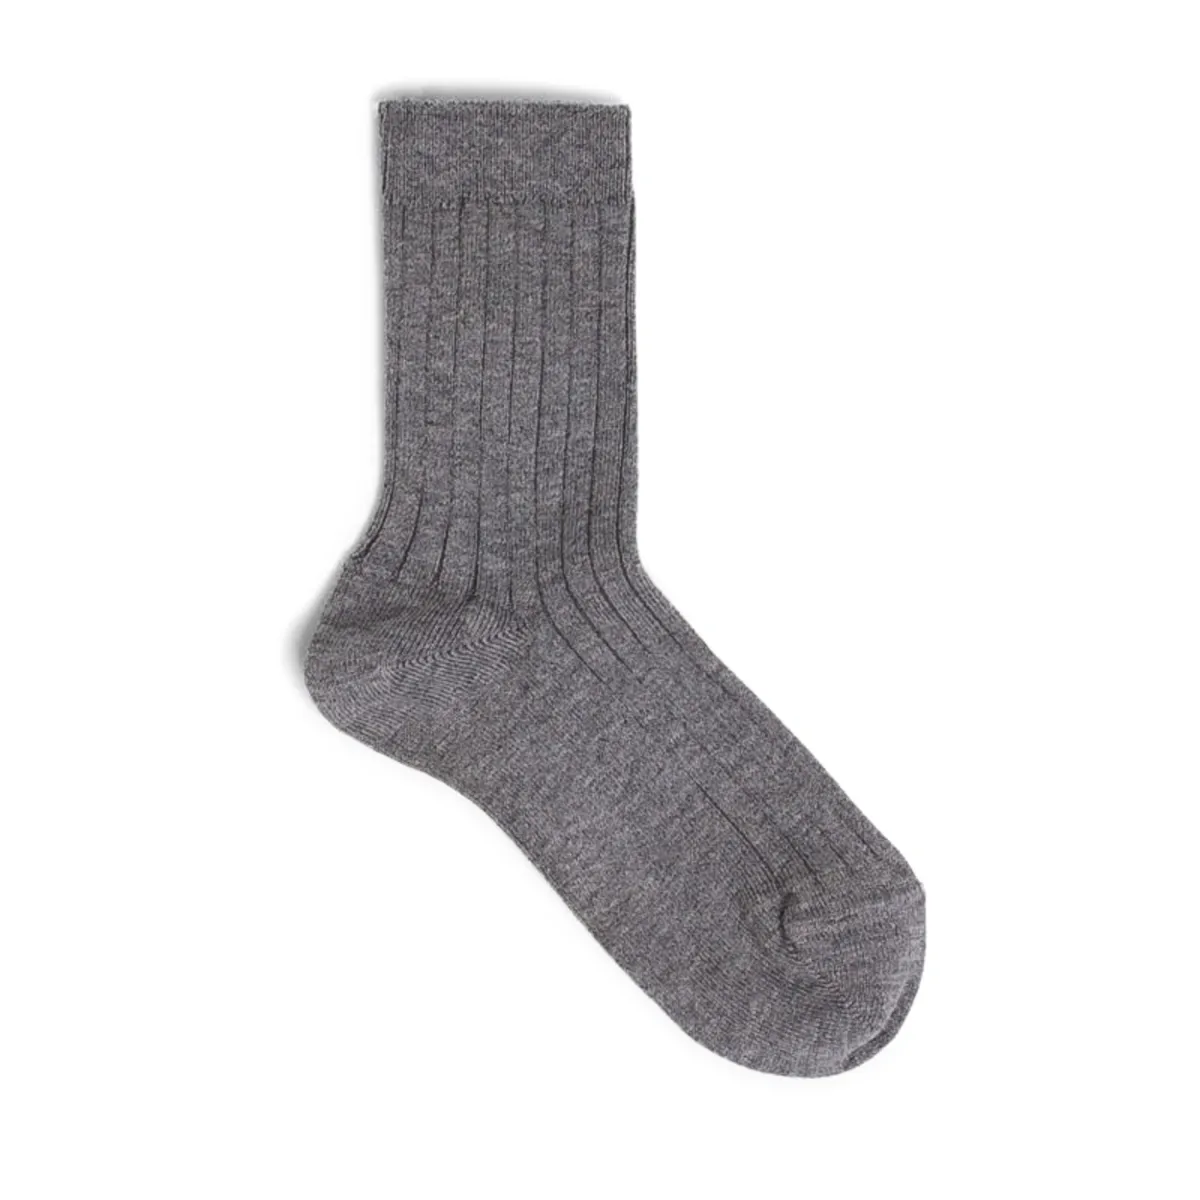 CONDOR - High socks